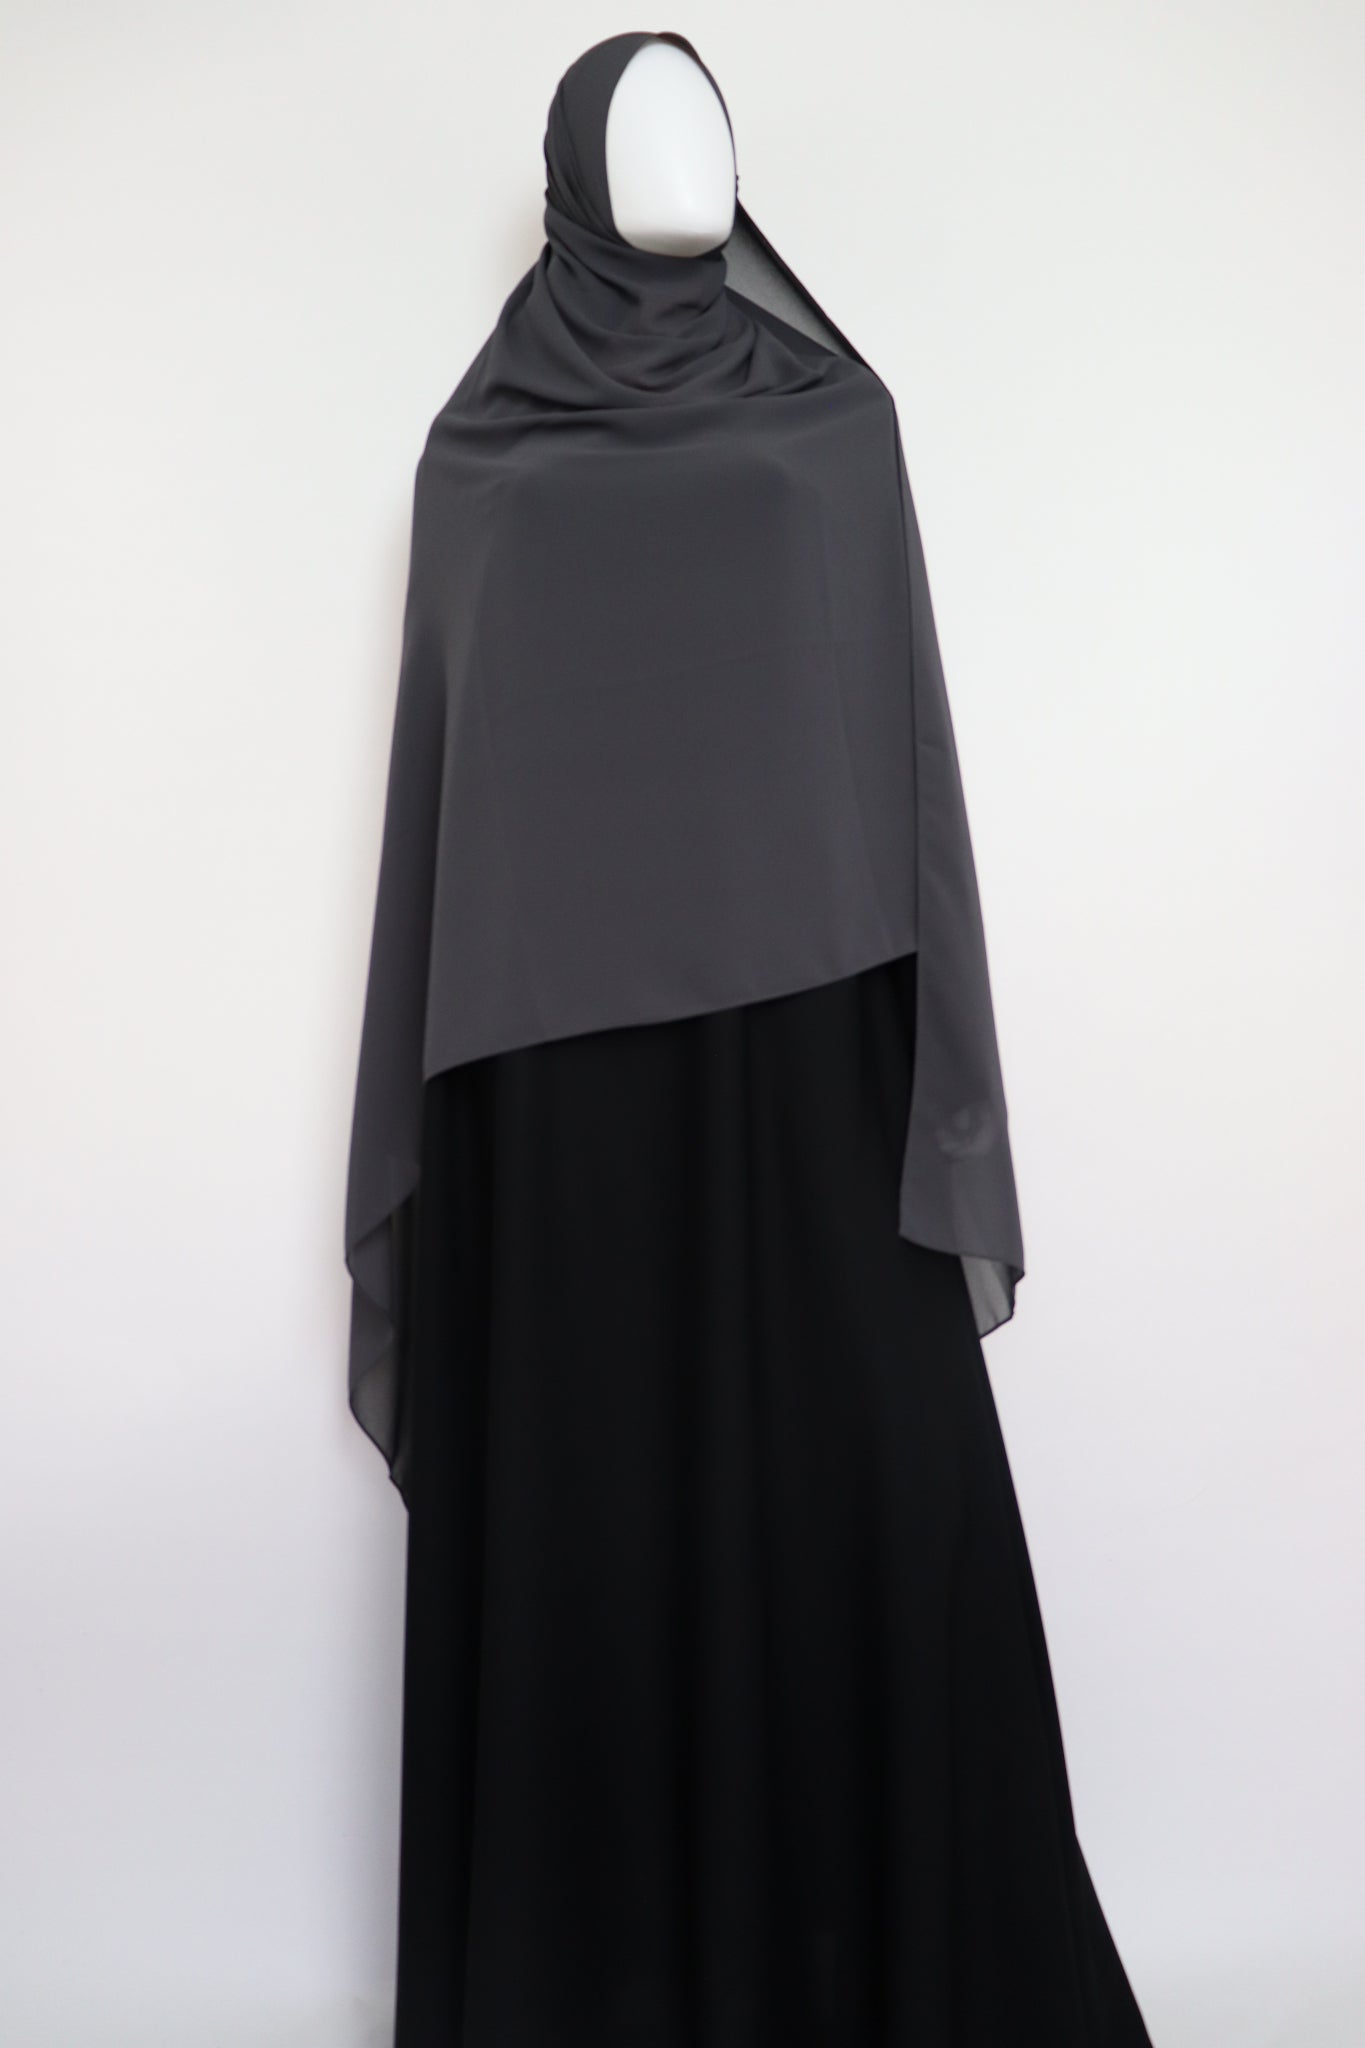 XL Premium Chiffon Hijab and Niqab Set - Charcoal